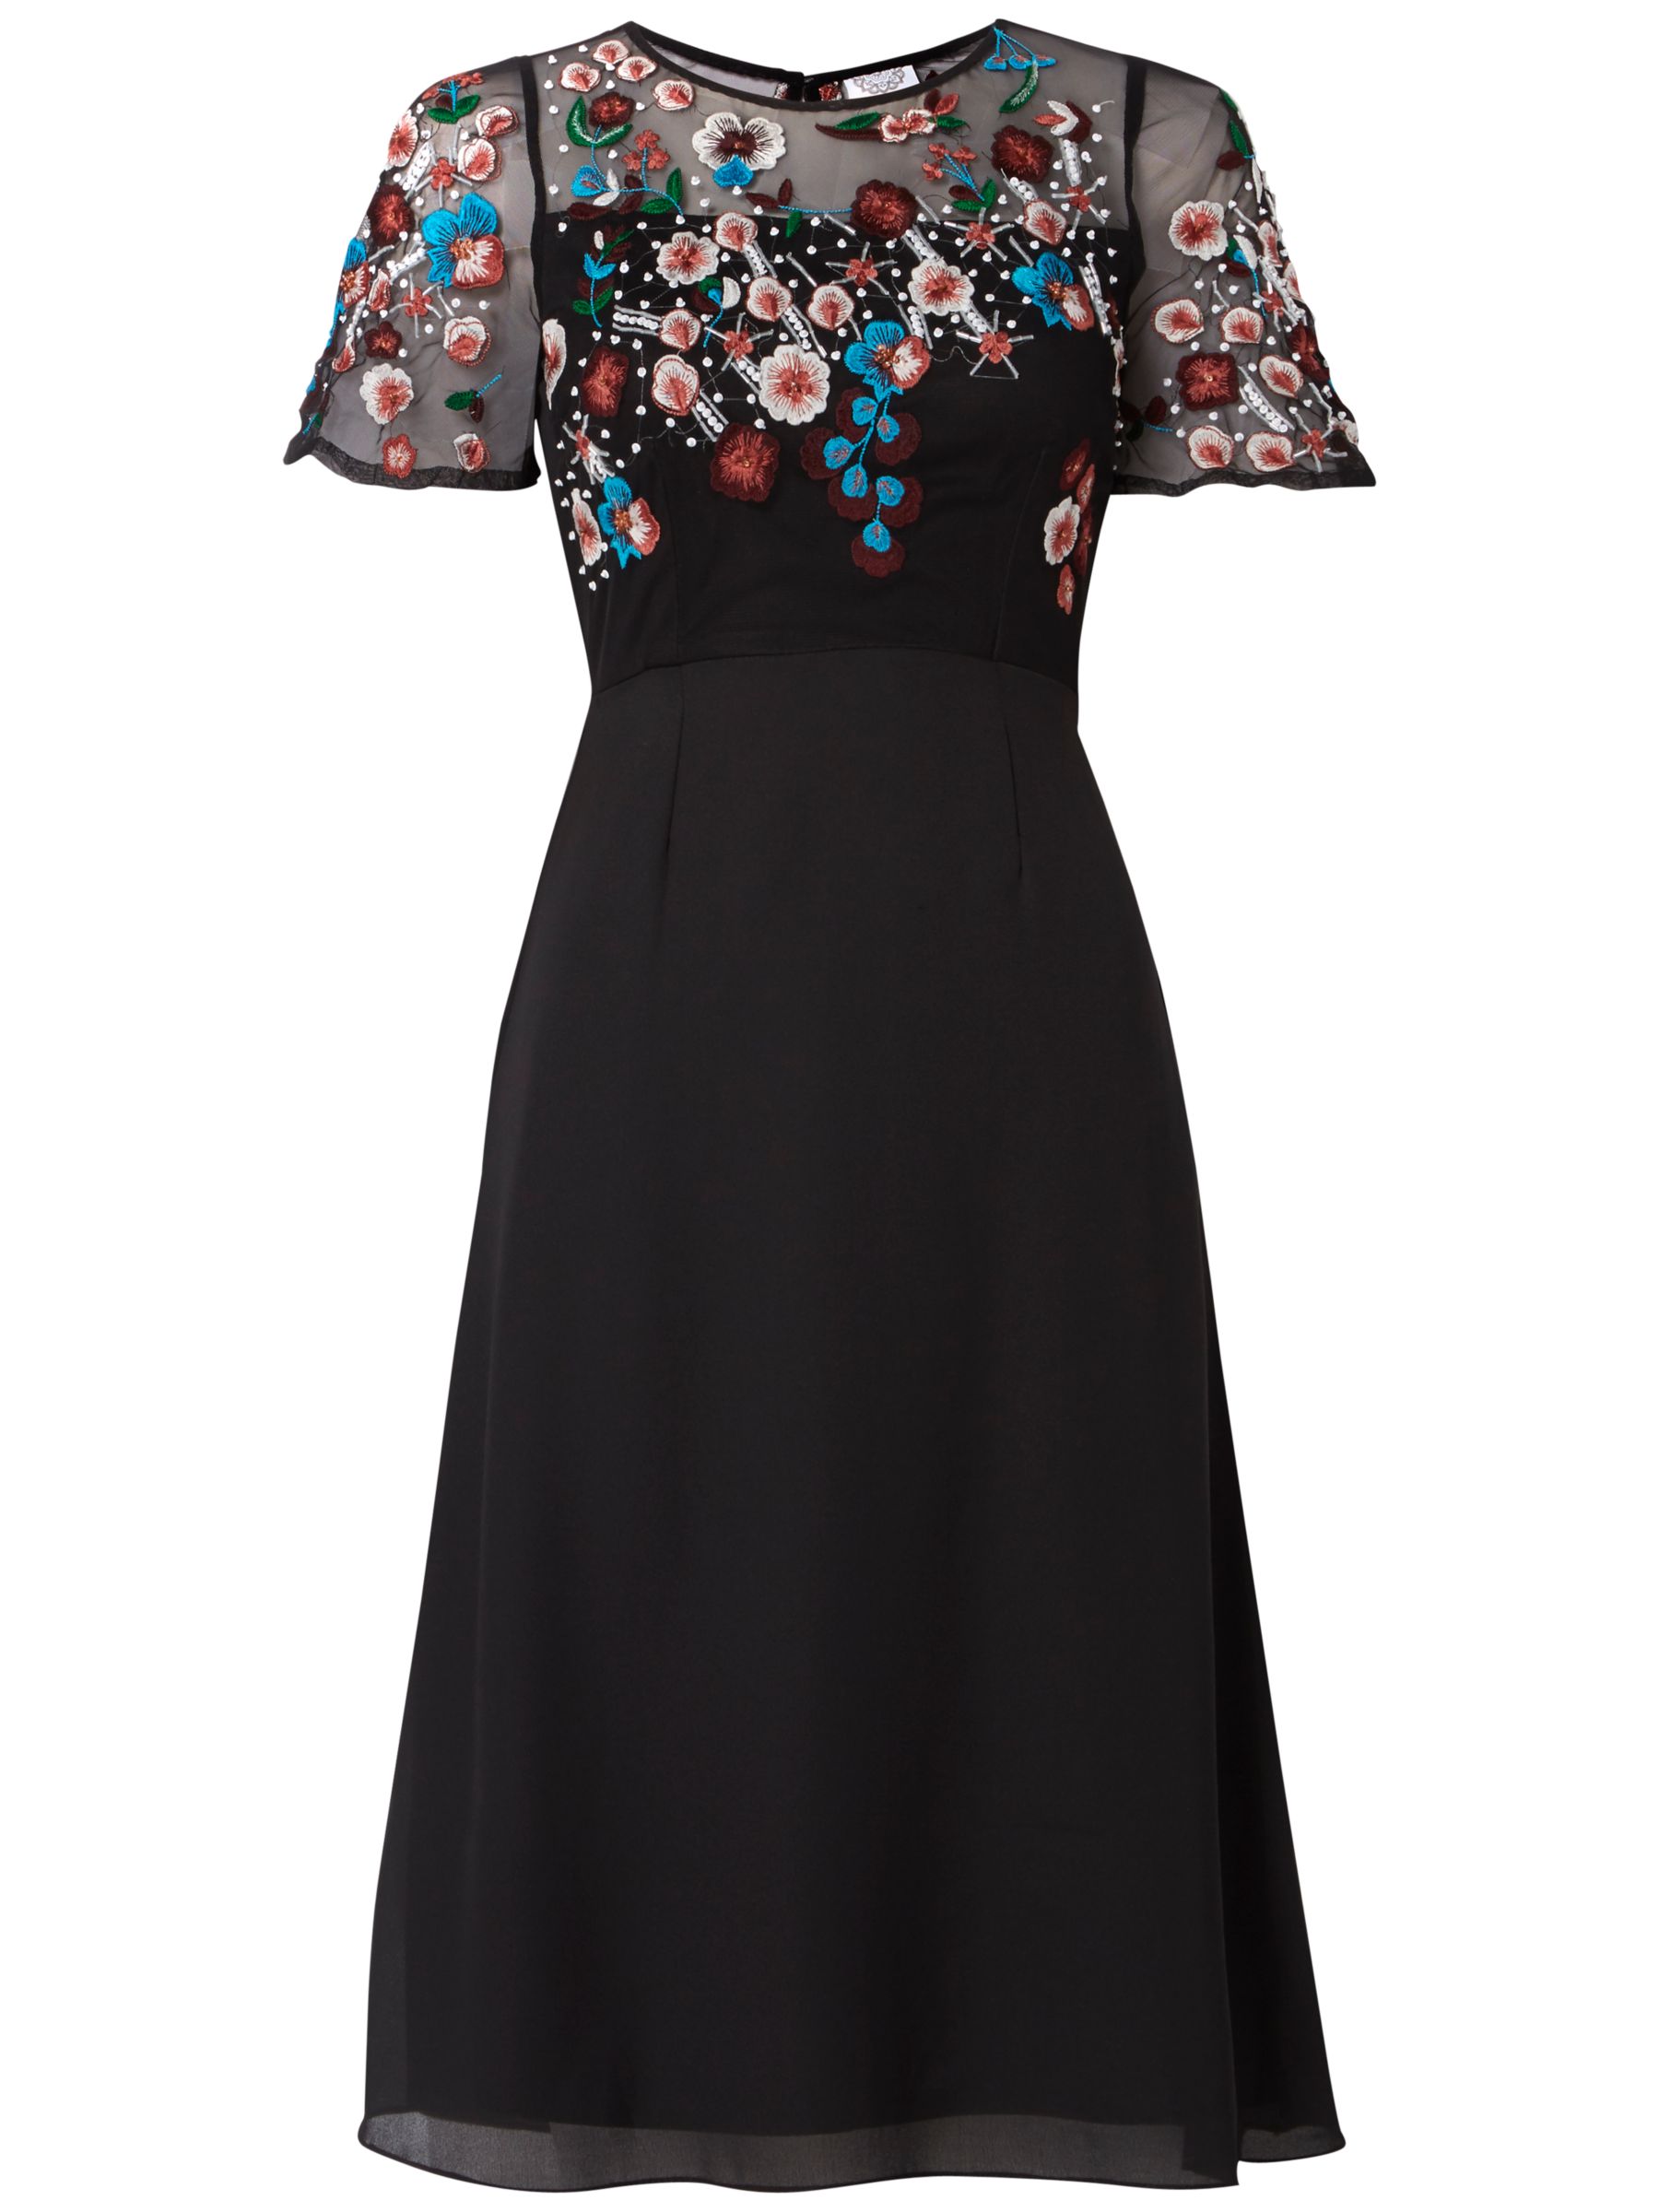 Raishma Autumn Floral Dress, Black at John Lewis & Partners